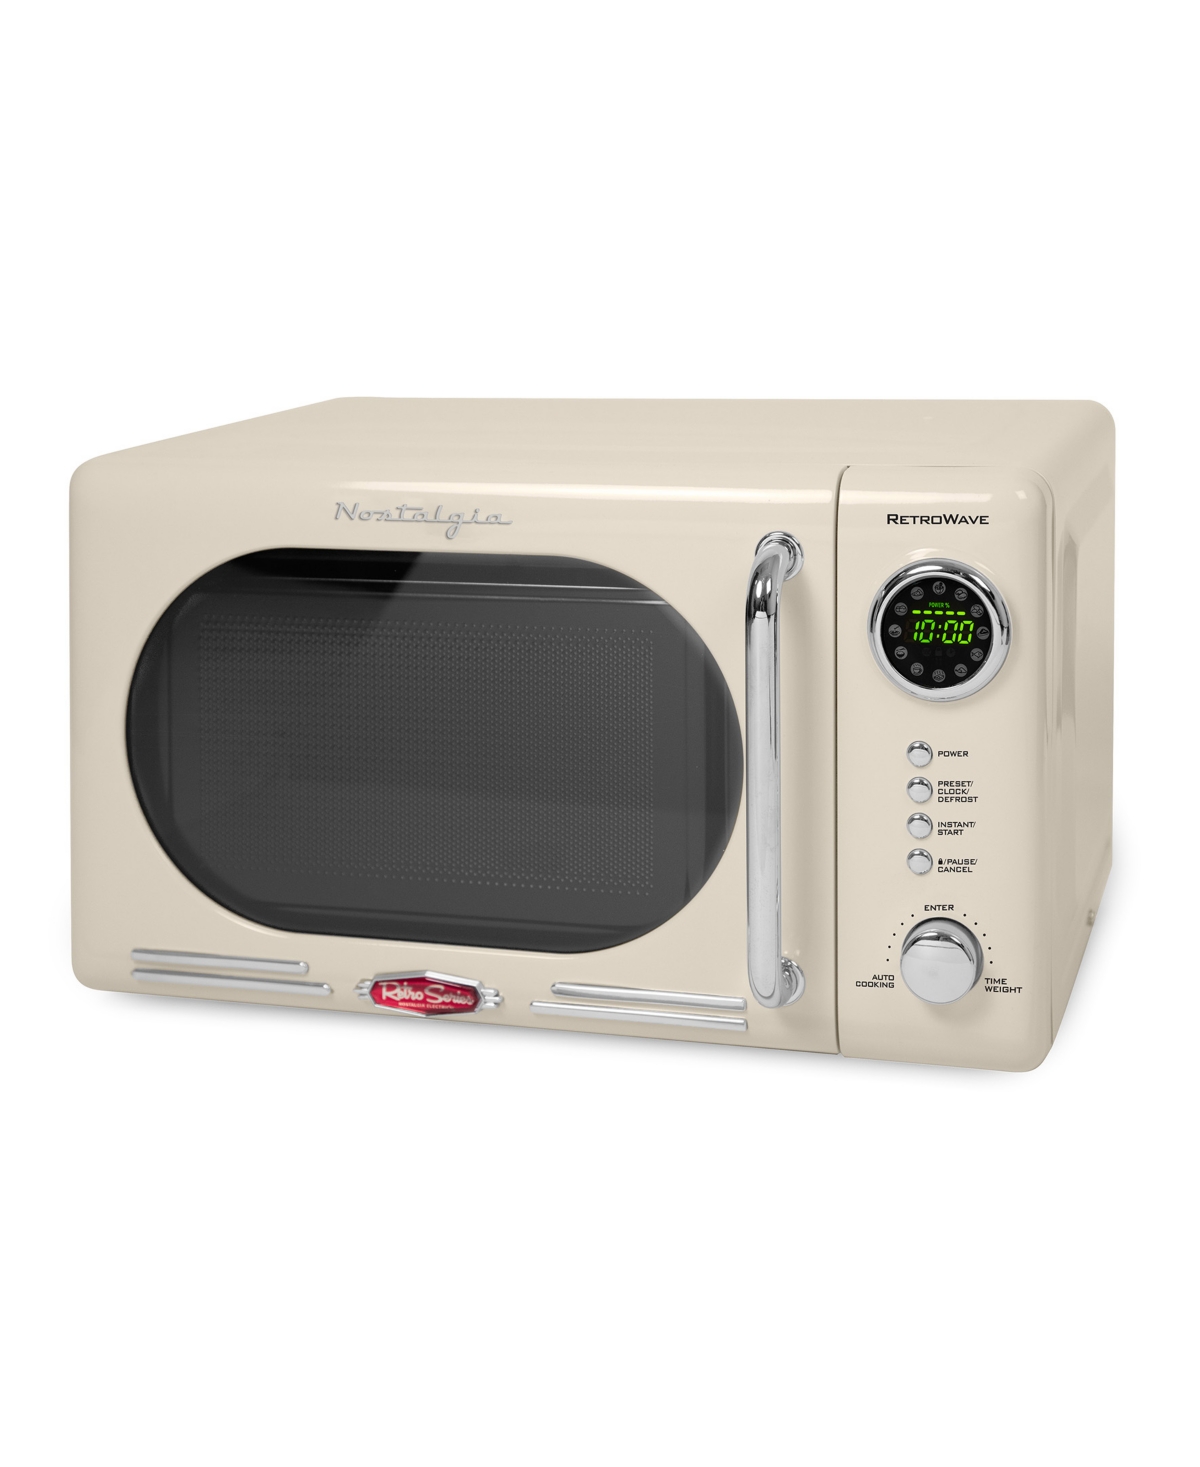 Nostalgia Retro 0.7 Cubic Foot 700 Watt Countertop Microwave Oven In Ivory